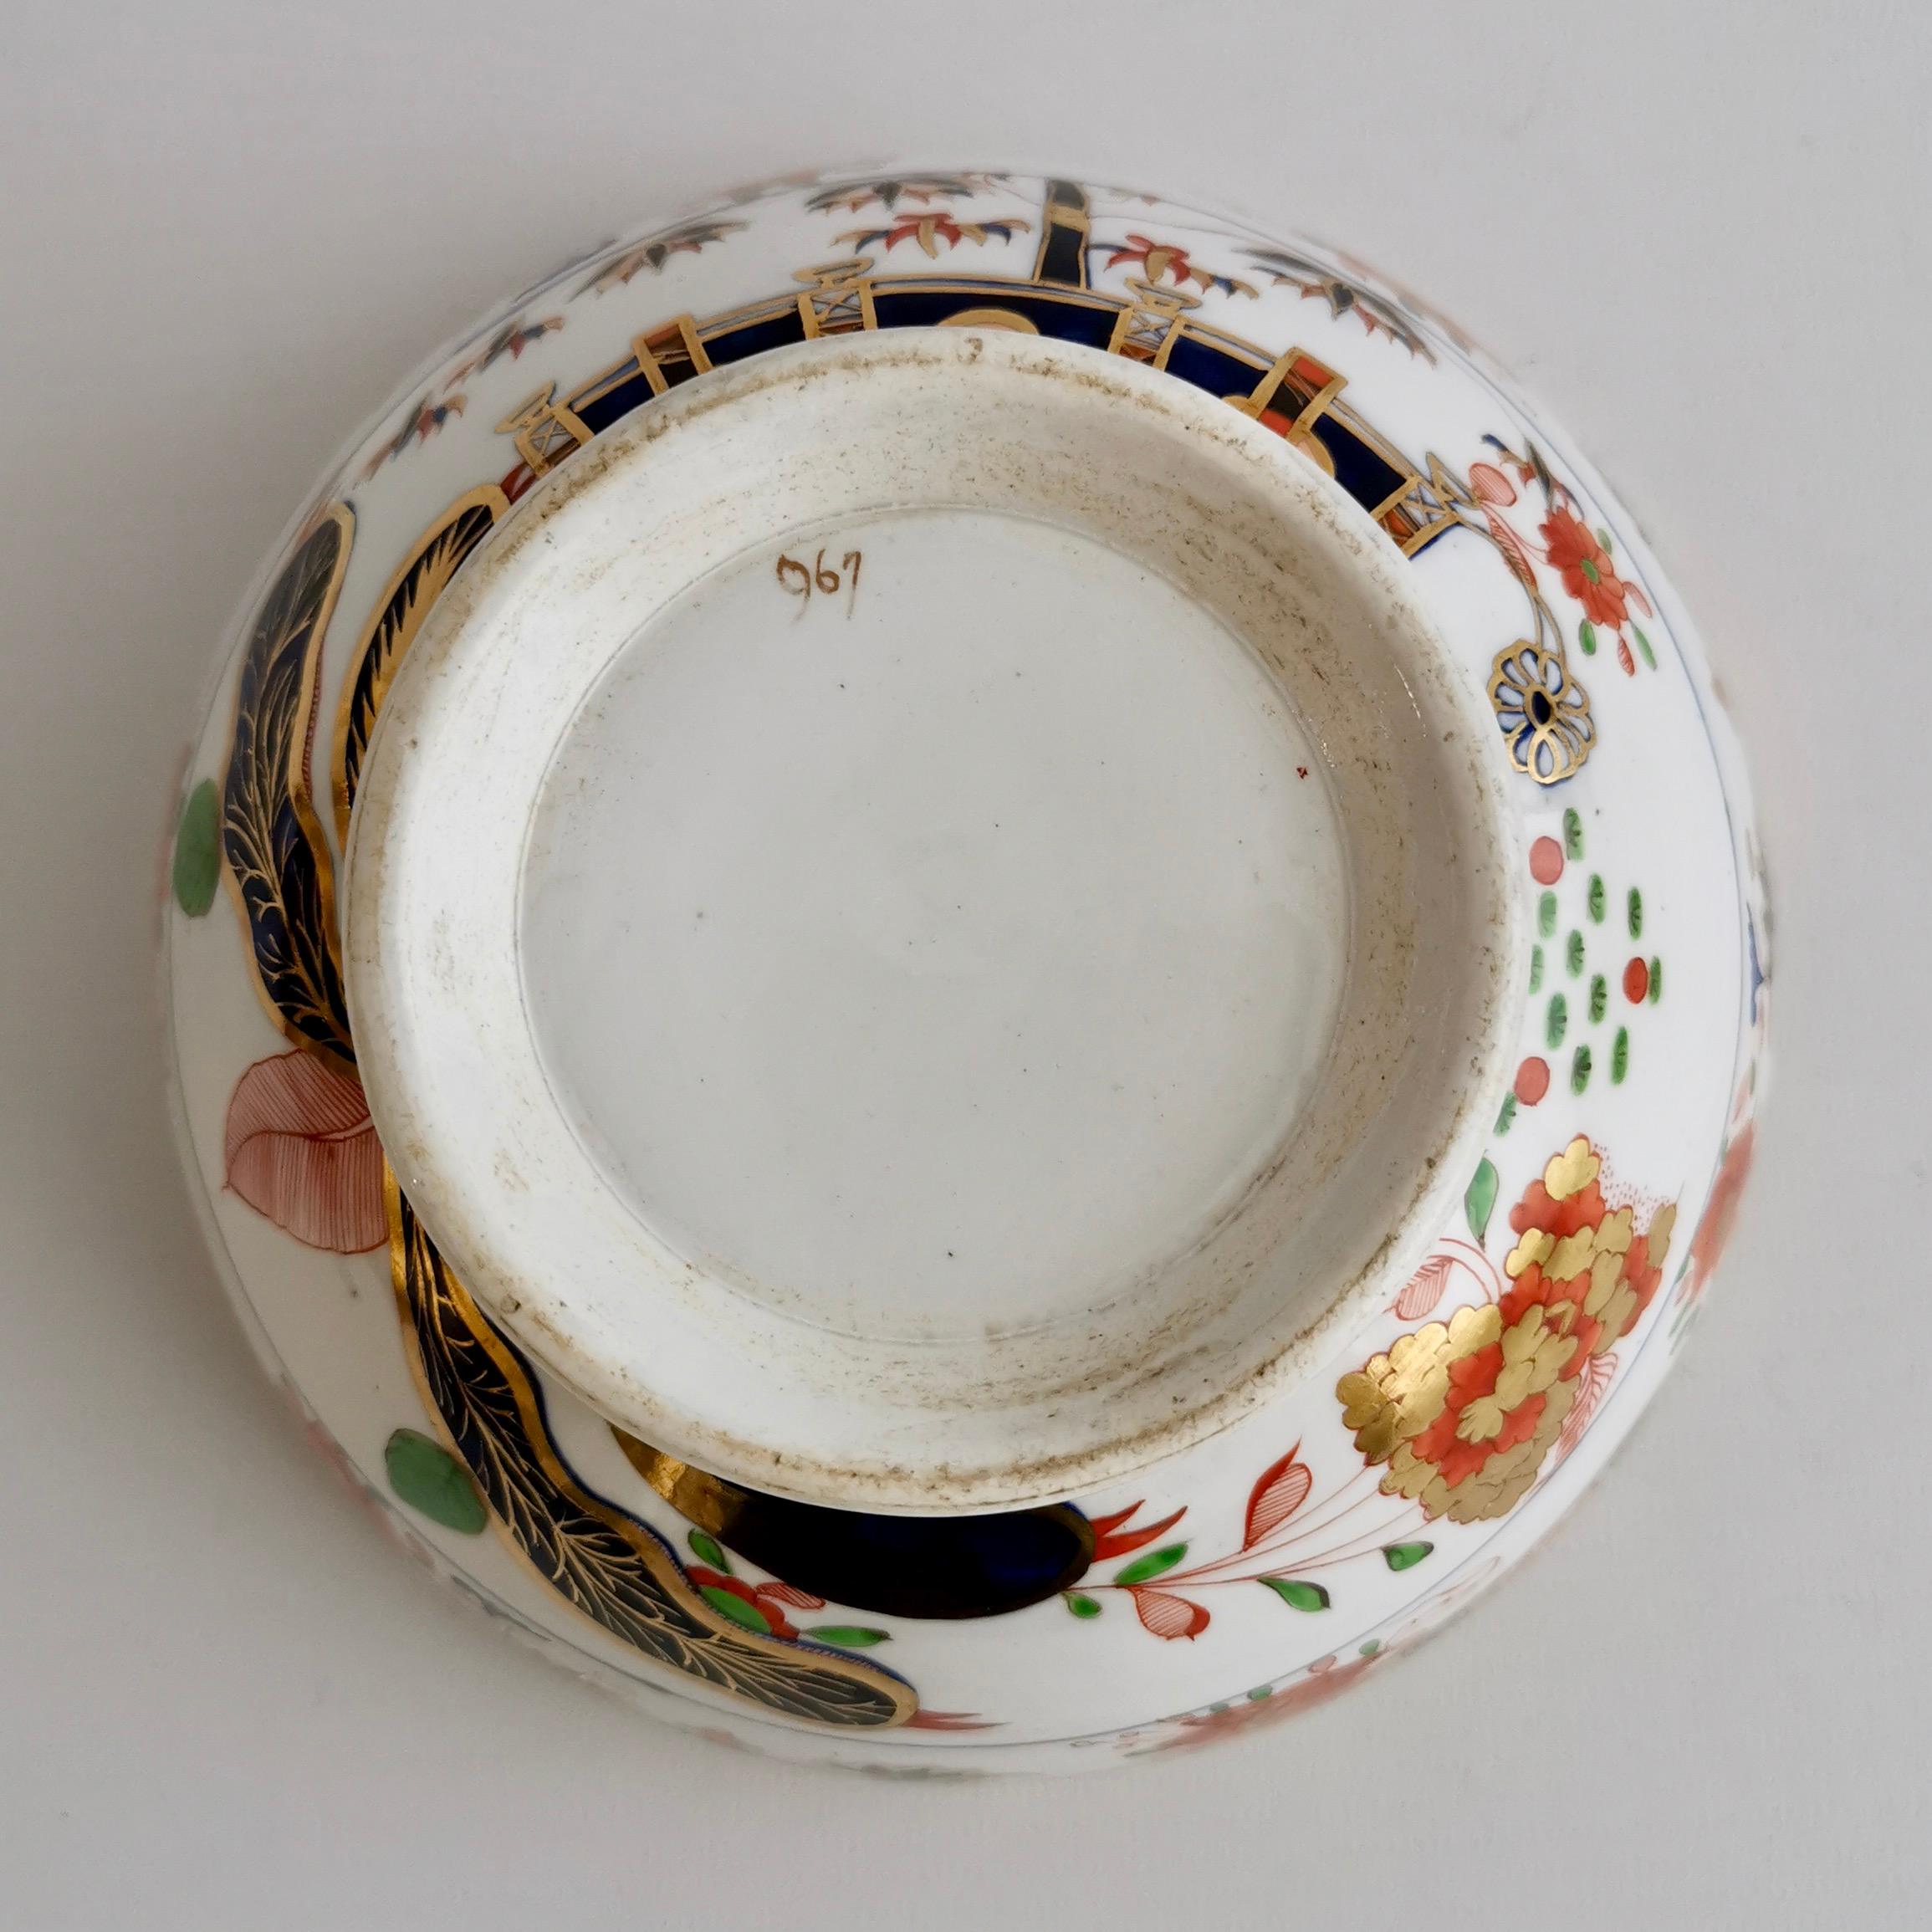 Spode Porcelain Bowl, Imari Tobacco Leaf Pattern 967, ca 1815 9